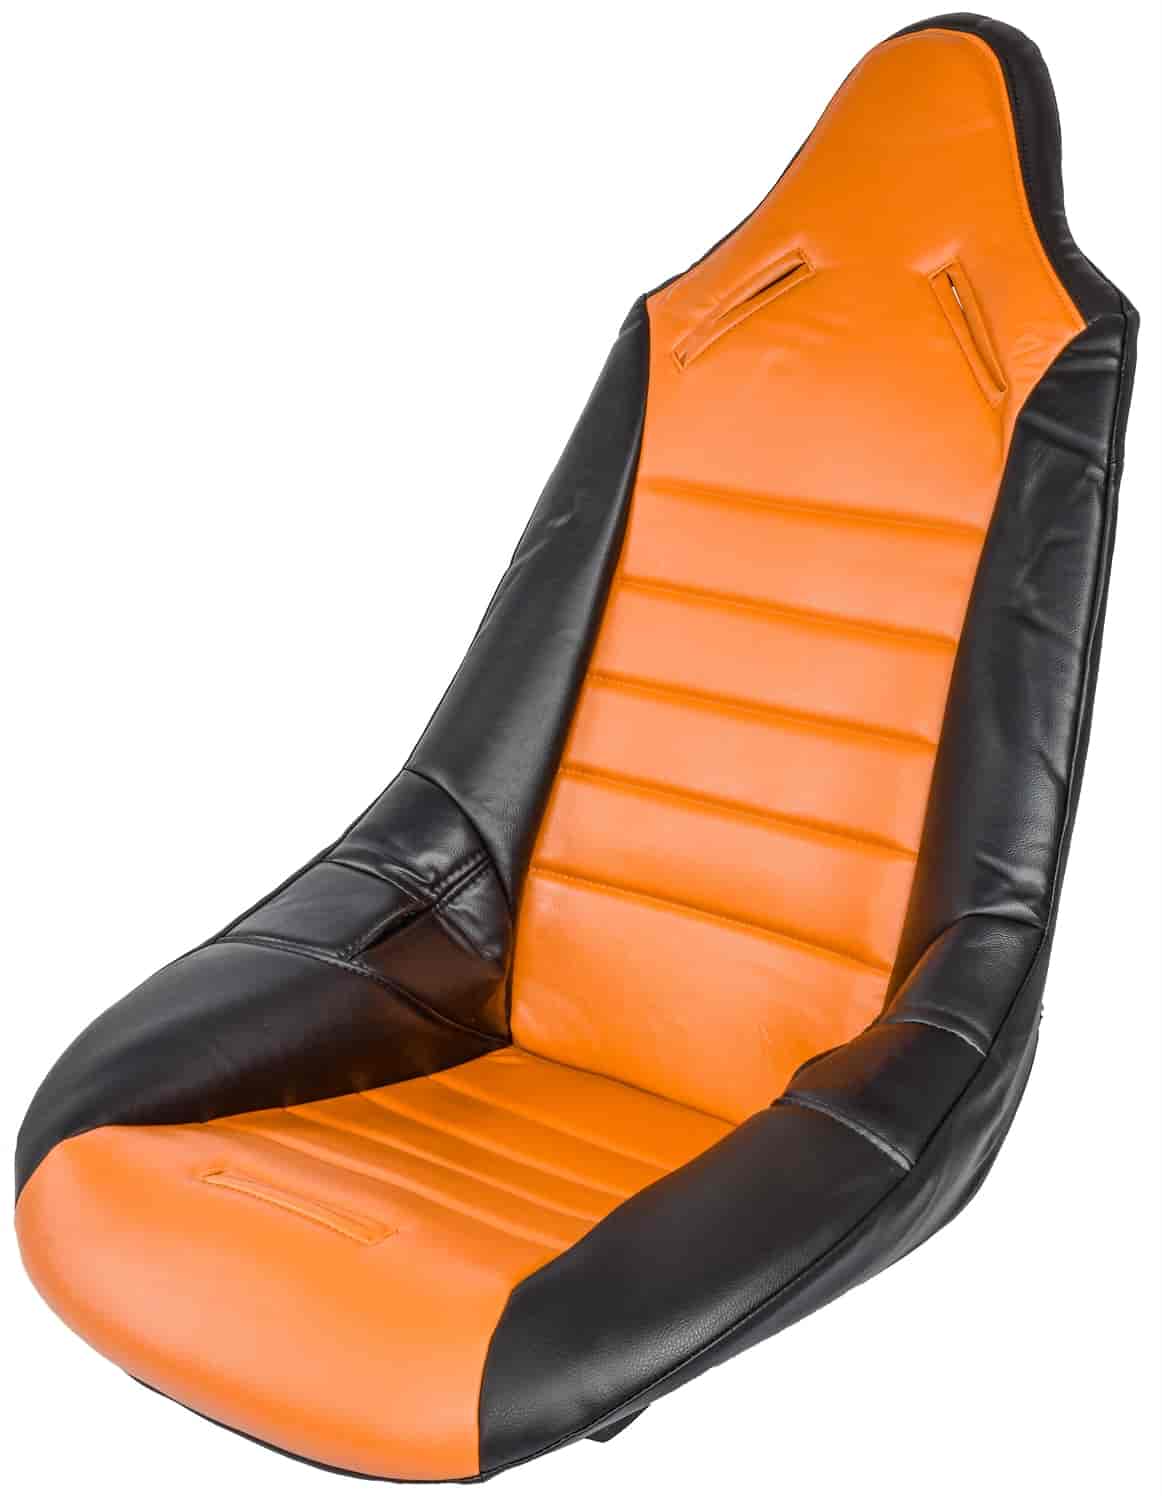 Pro High Back II Vinyl Seat Cover Orange with Black Trim